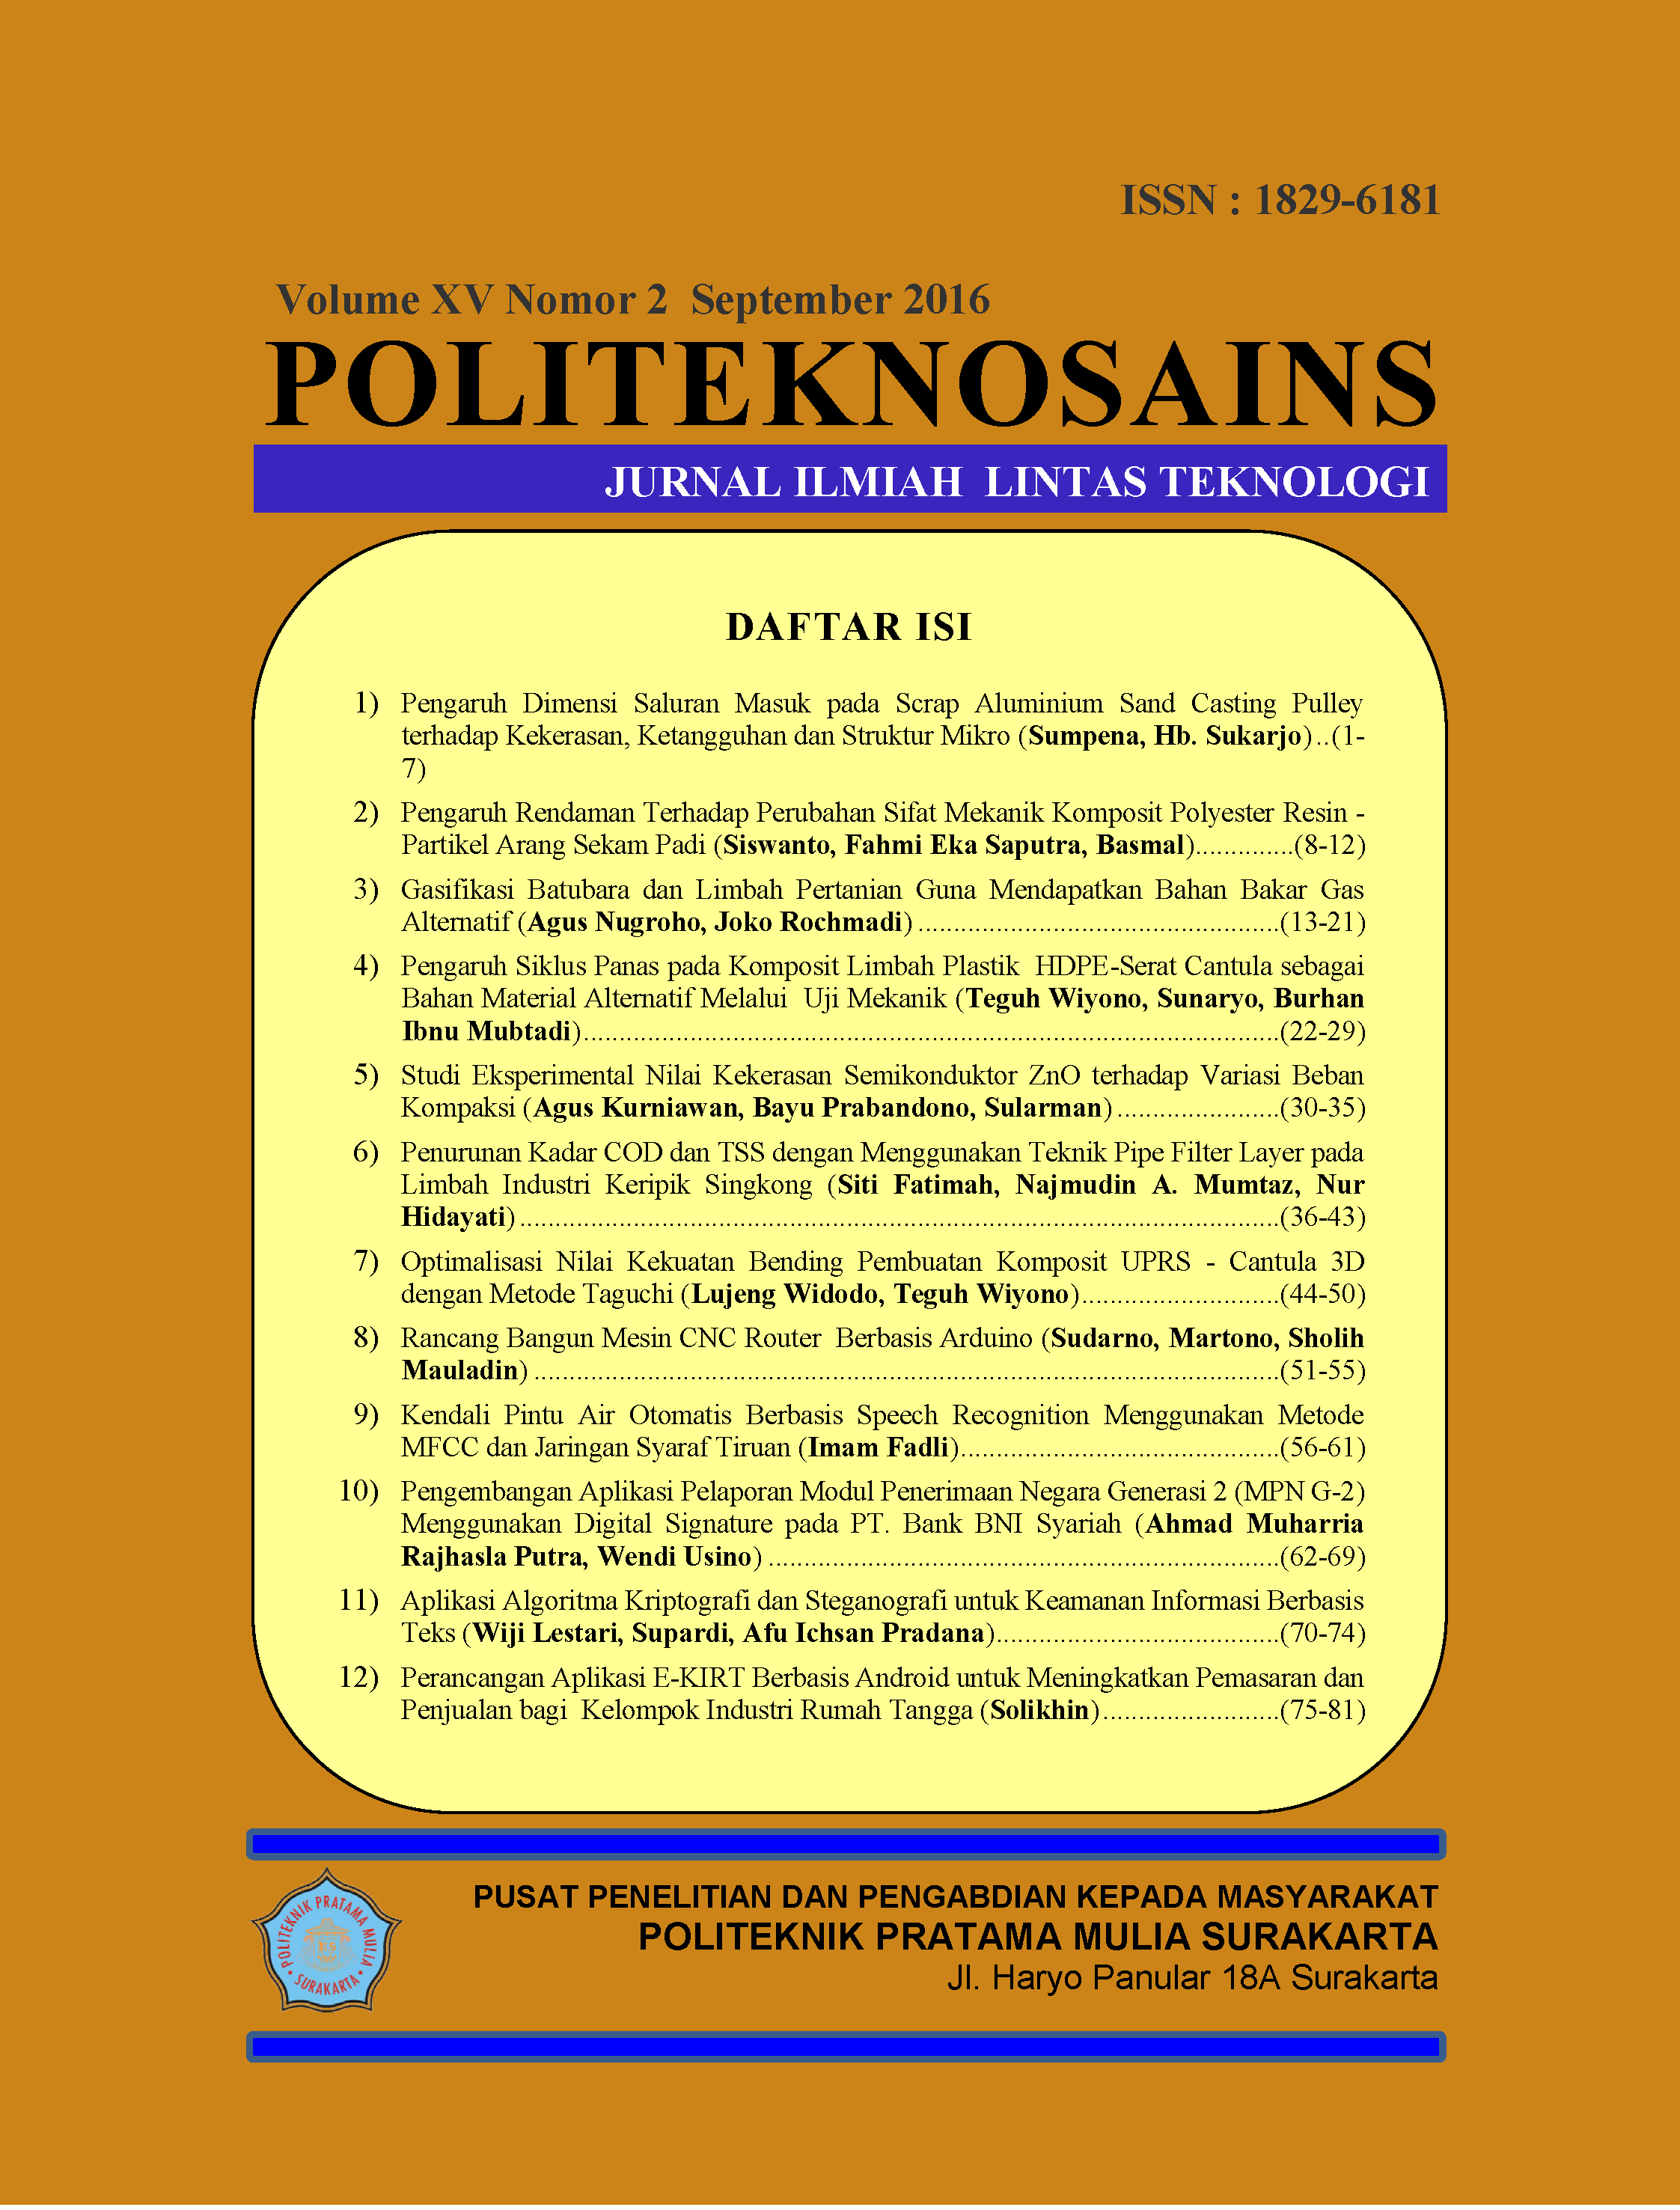 					Lihat Vol 15 No 2 (2016): Jurnal Politeknosains Volume 15 Nomor 2 - September  2016
				